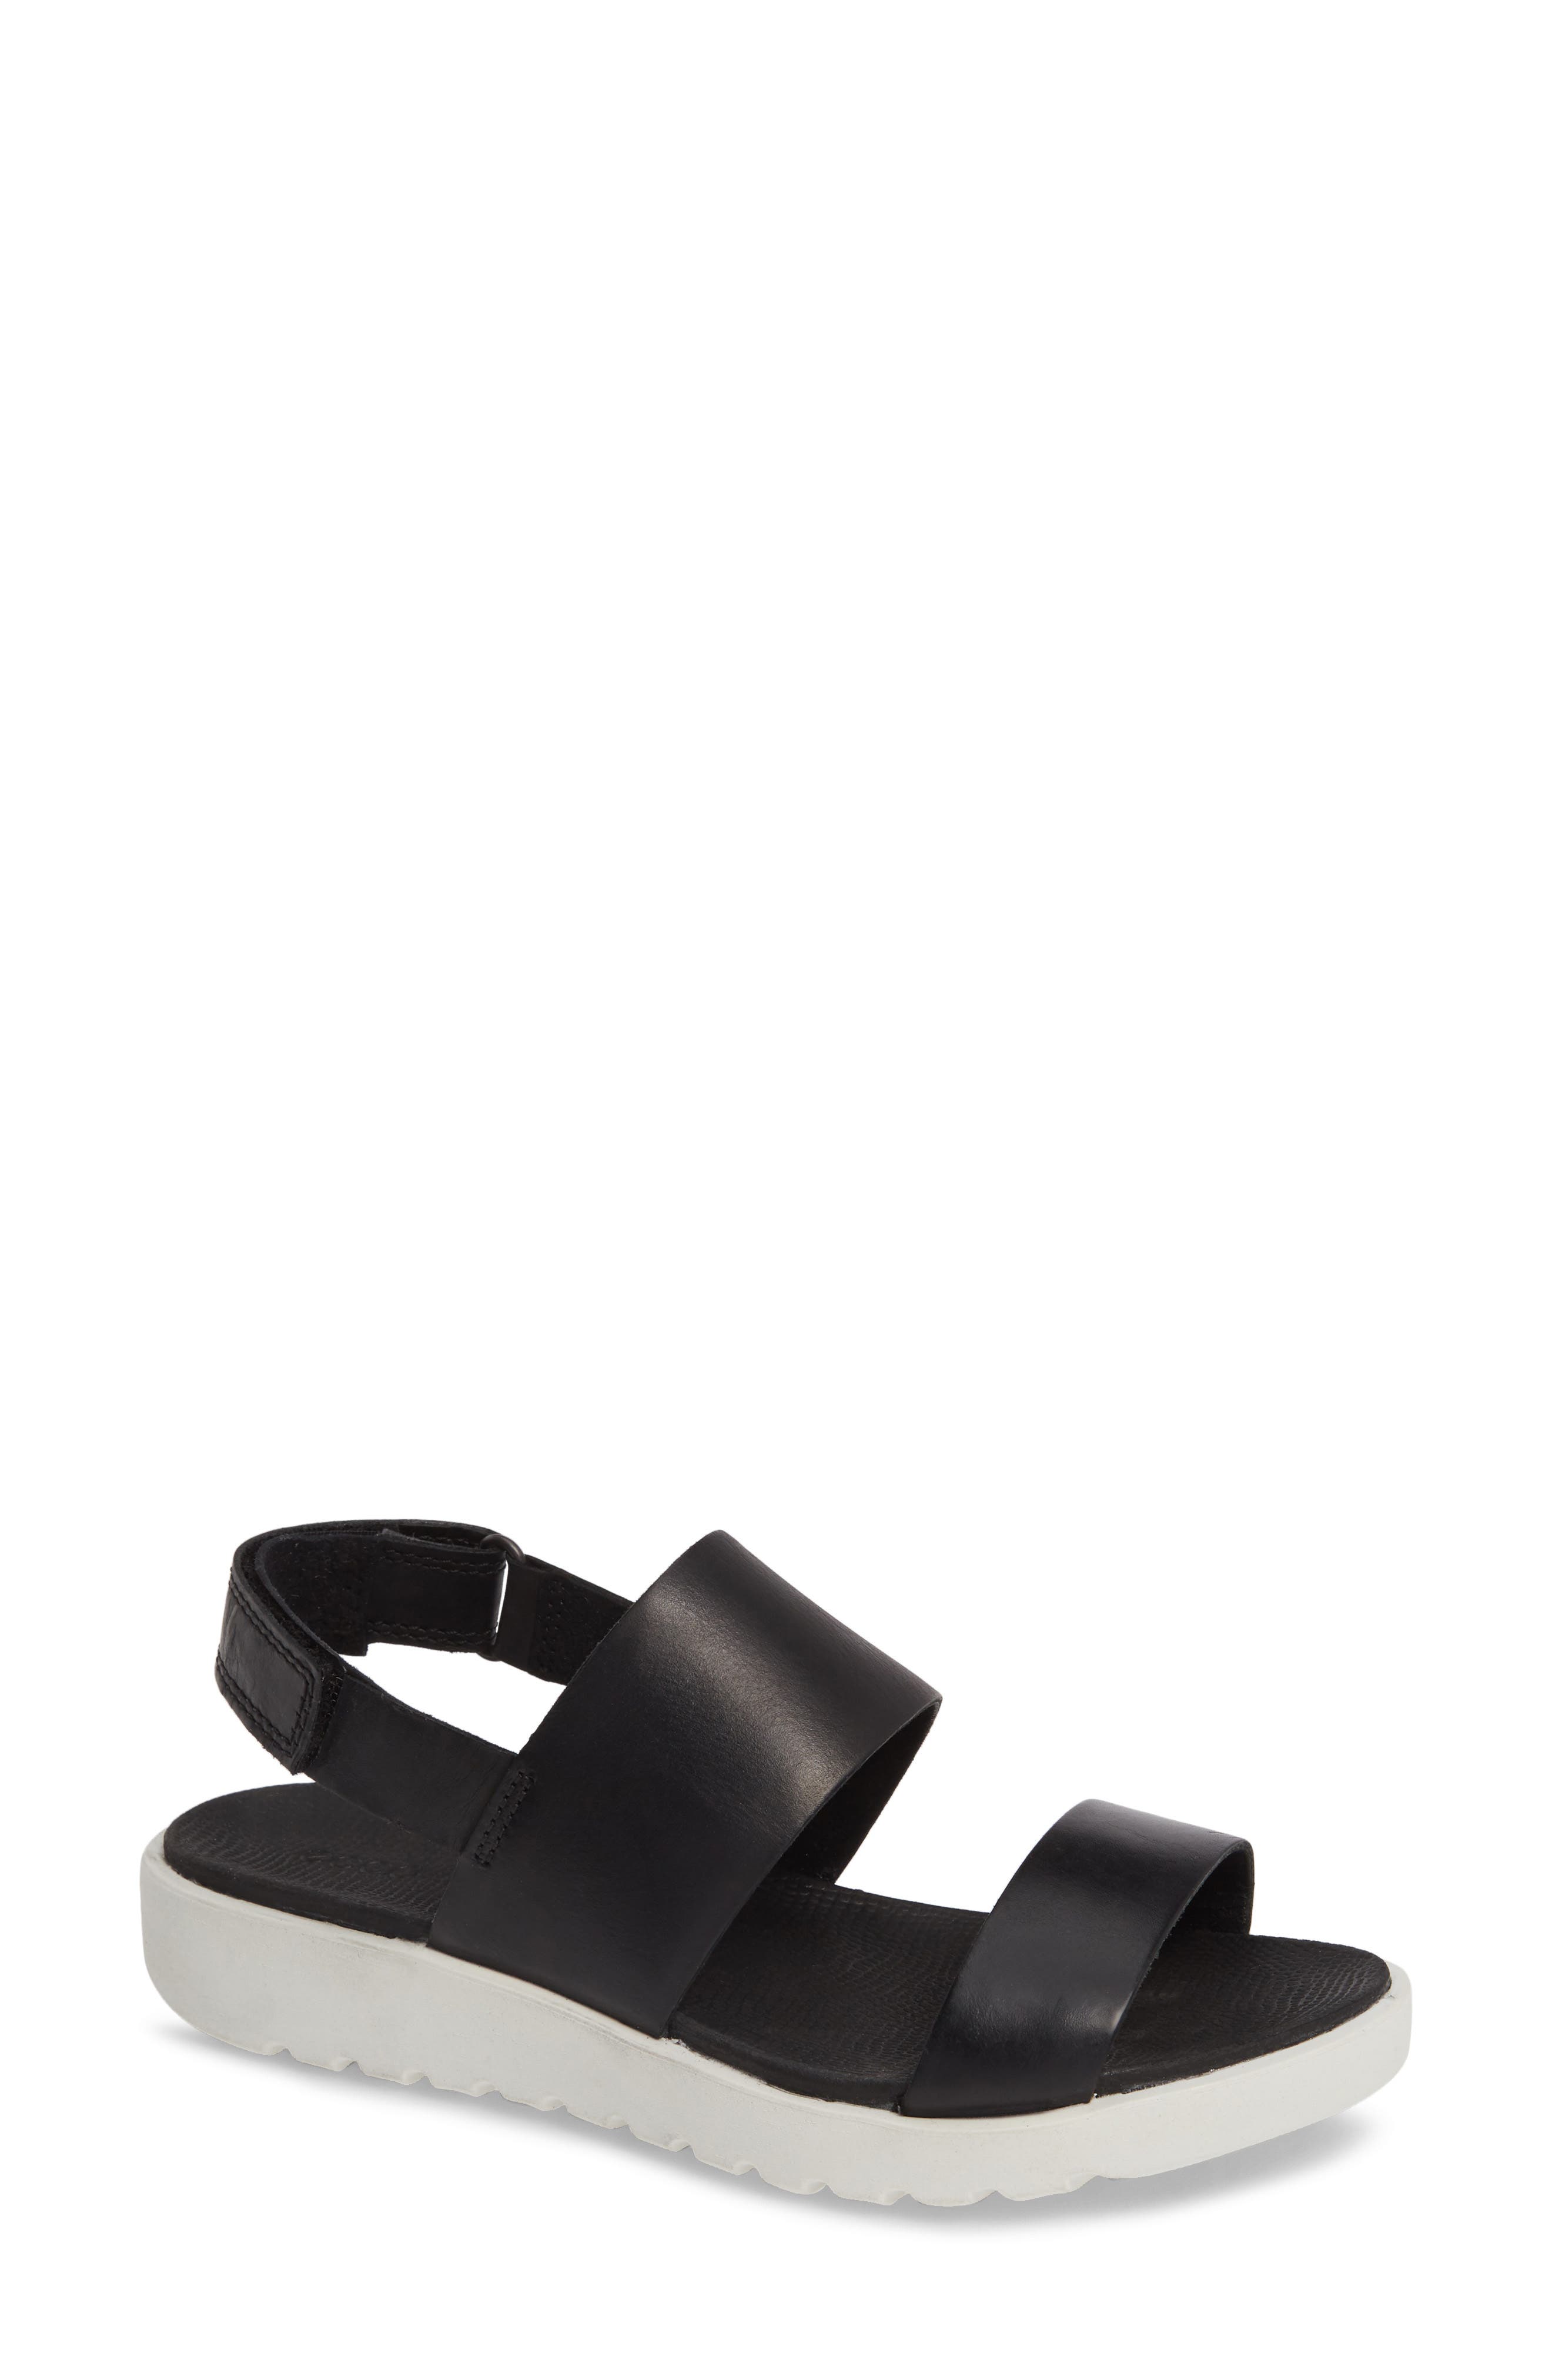 UPC 809704407159 product image for Women's Ecco 'Freja' Two-Strap Sandal, Size 8-8.5US / 39EU - Black | upcitemdb.com